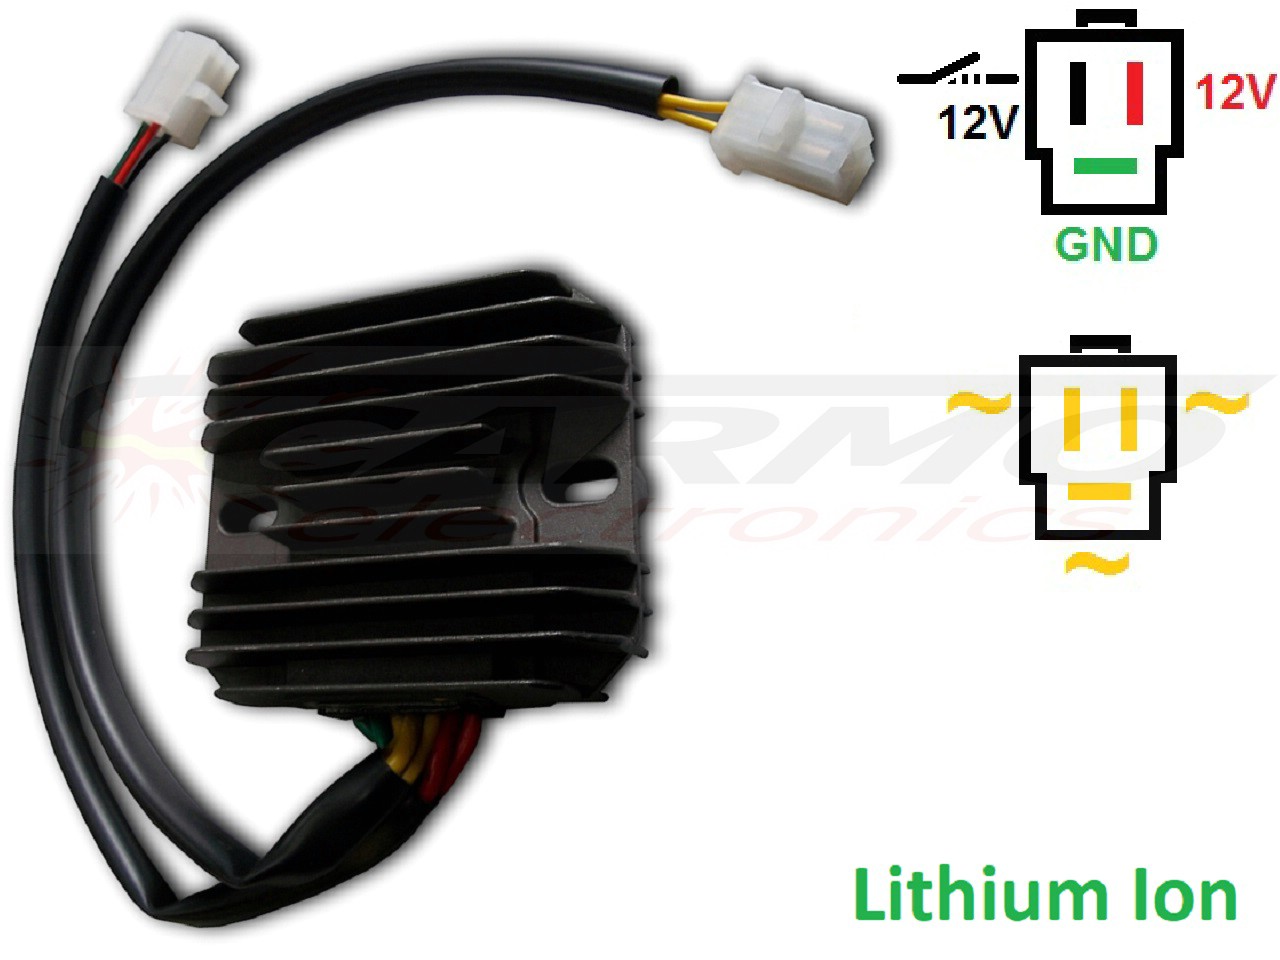 CARR164-LI - Honda CX500 Suzuki VS800 MOSFET Voltage regulator rectifier (31600-415-008, SH232-12, Shindengen) - Lithium Ion - Click Image to Close